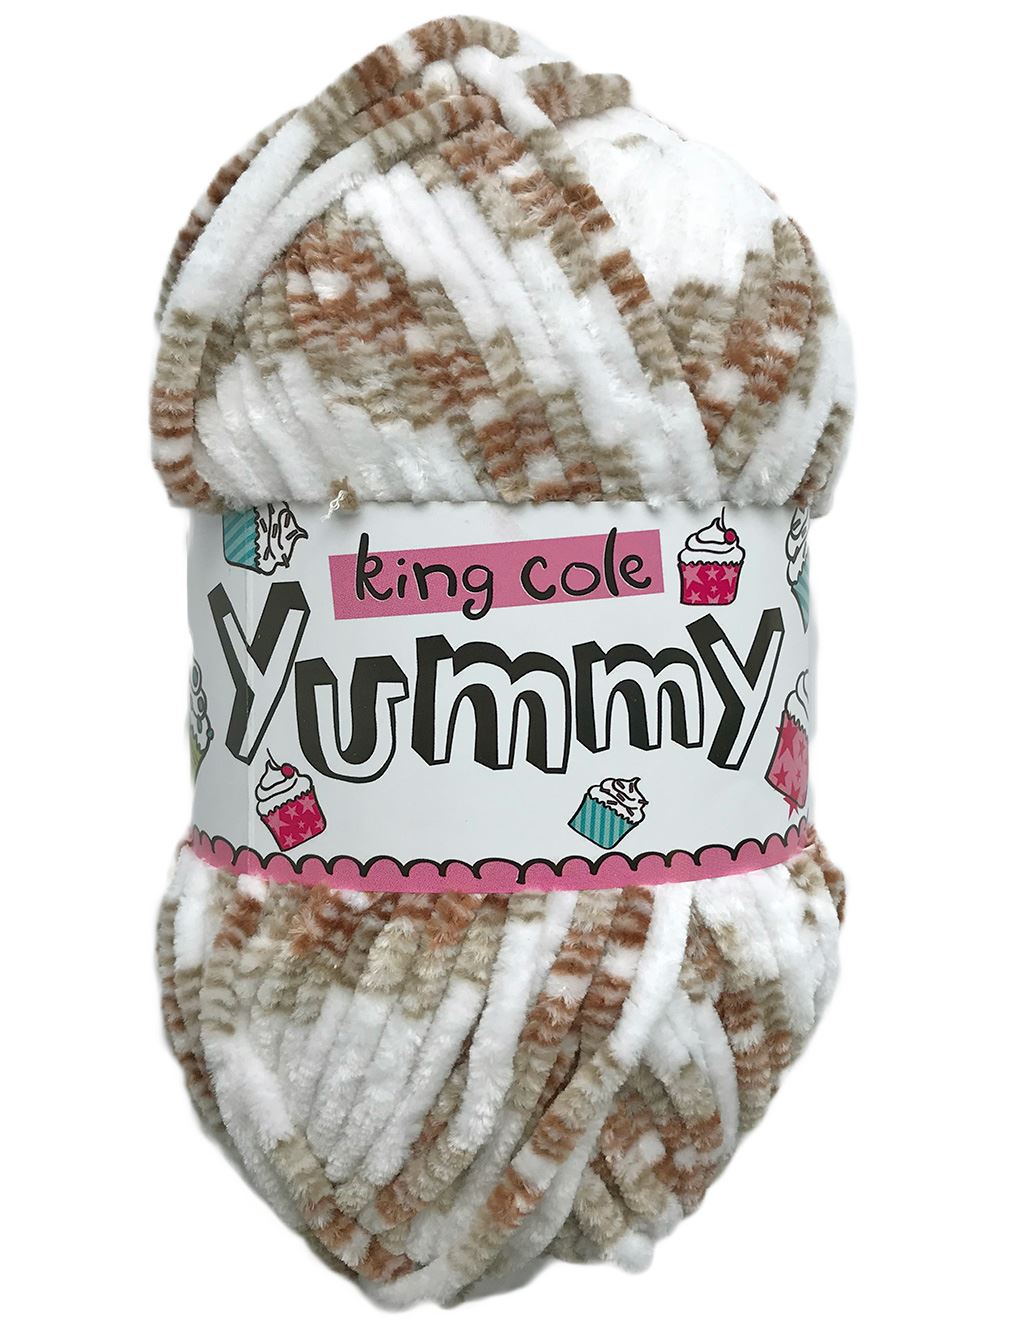 King Cole Yummy Cappuccino (2210) chenille yarn - 100g